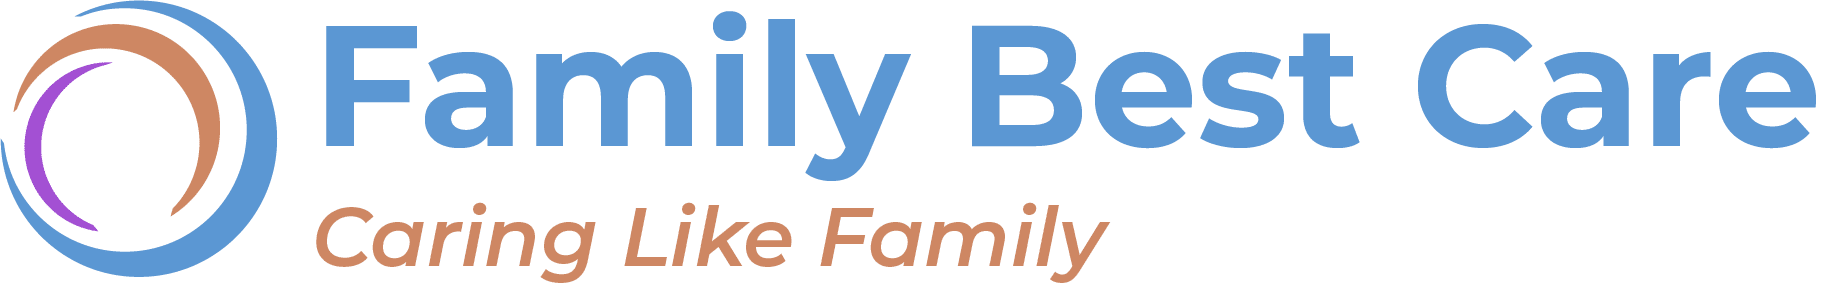 Family Best Care